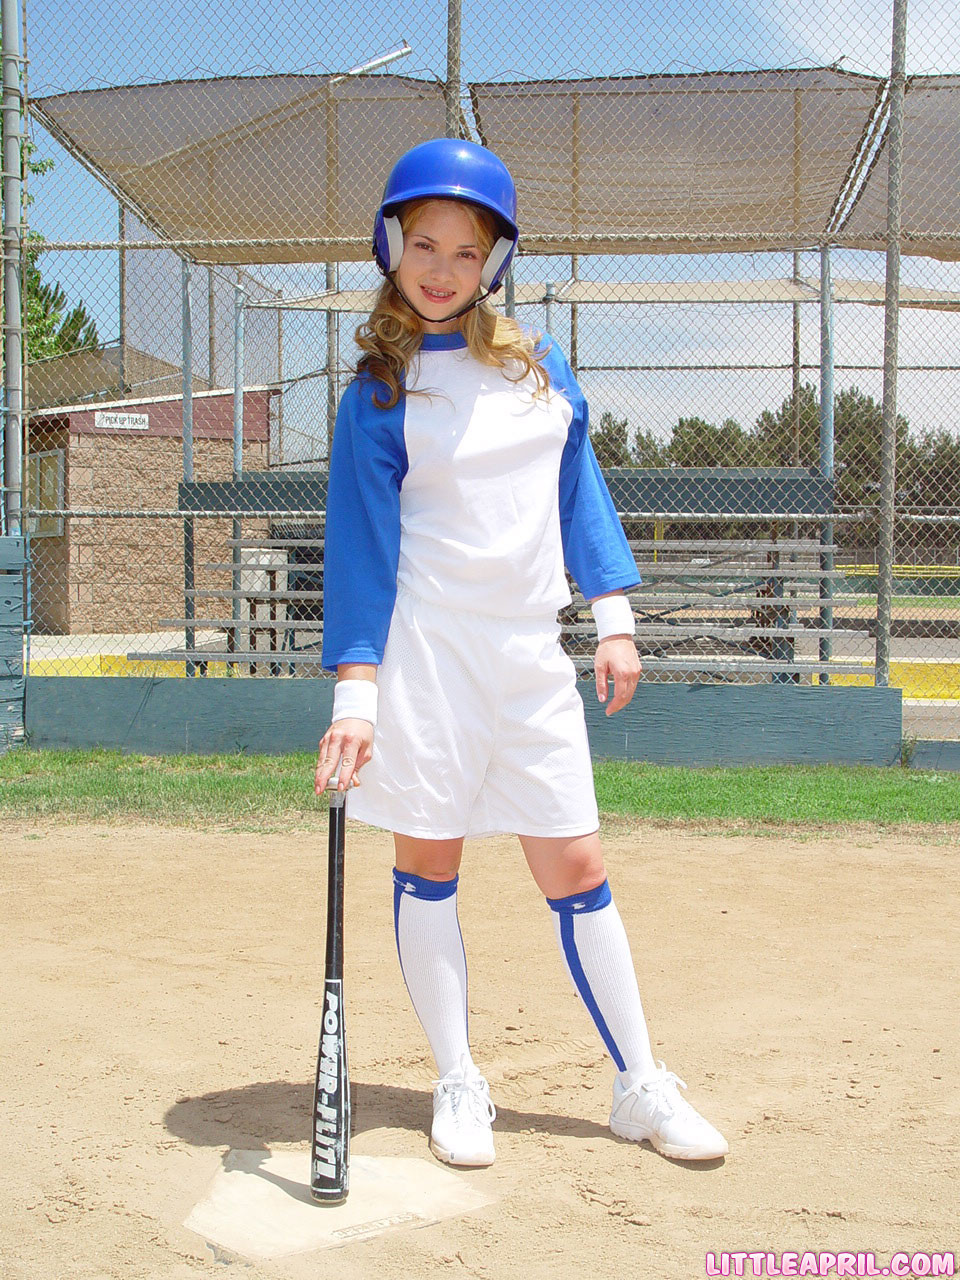 April looking cute in her baseball uniform #68111164